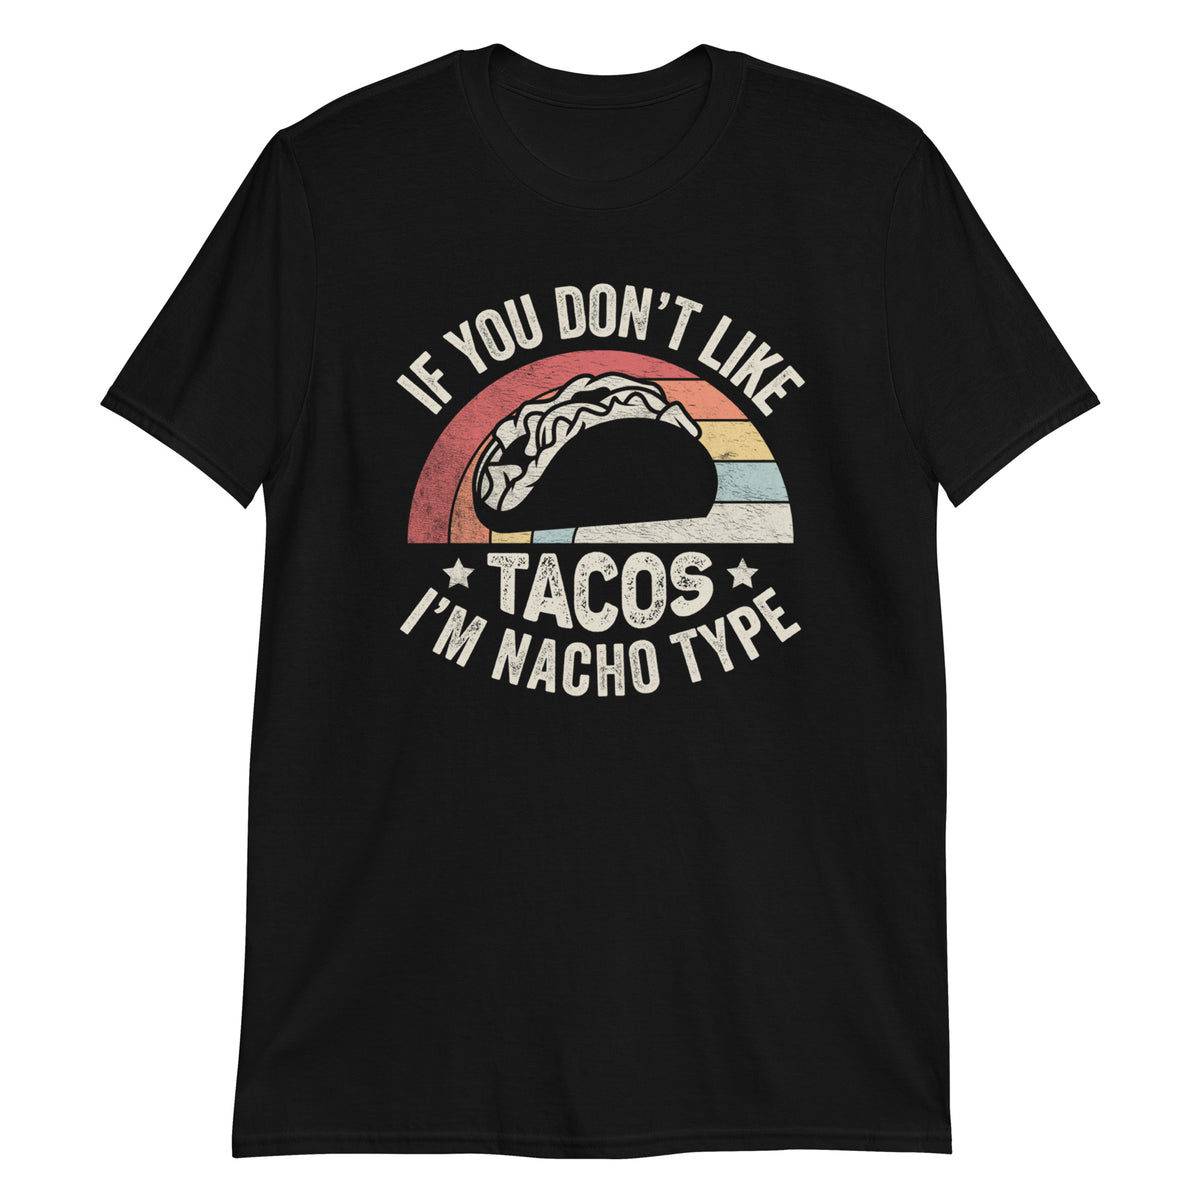 If You Don't Like Tacos I'm Nacho Type T-Shirt